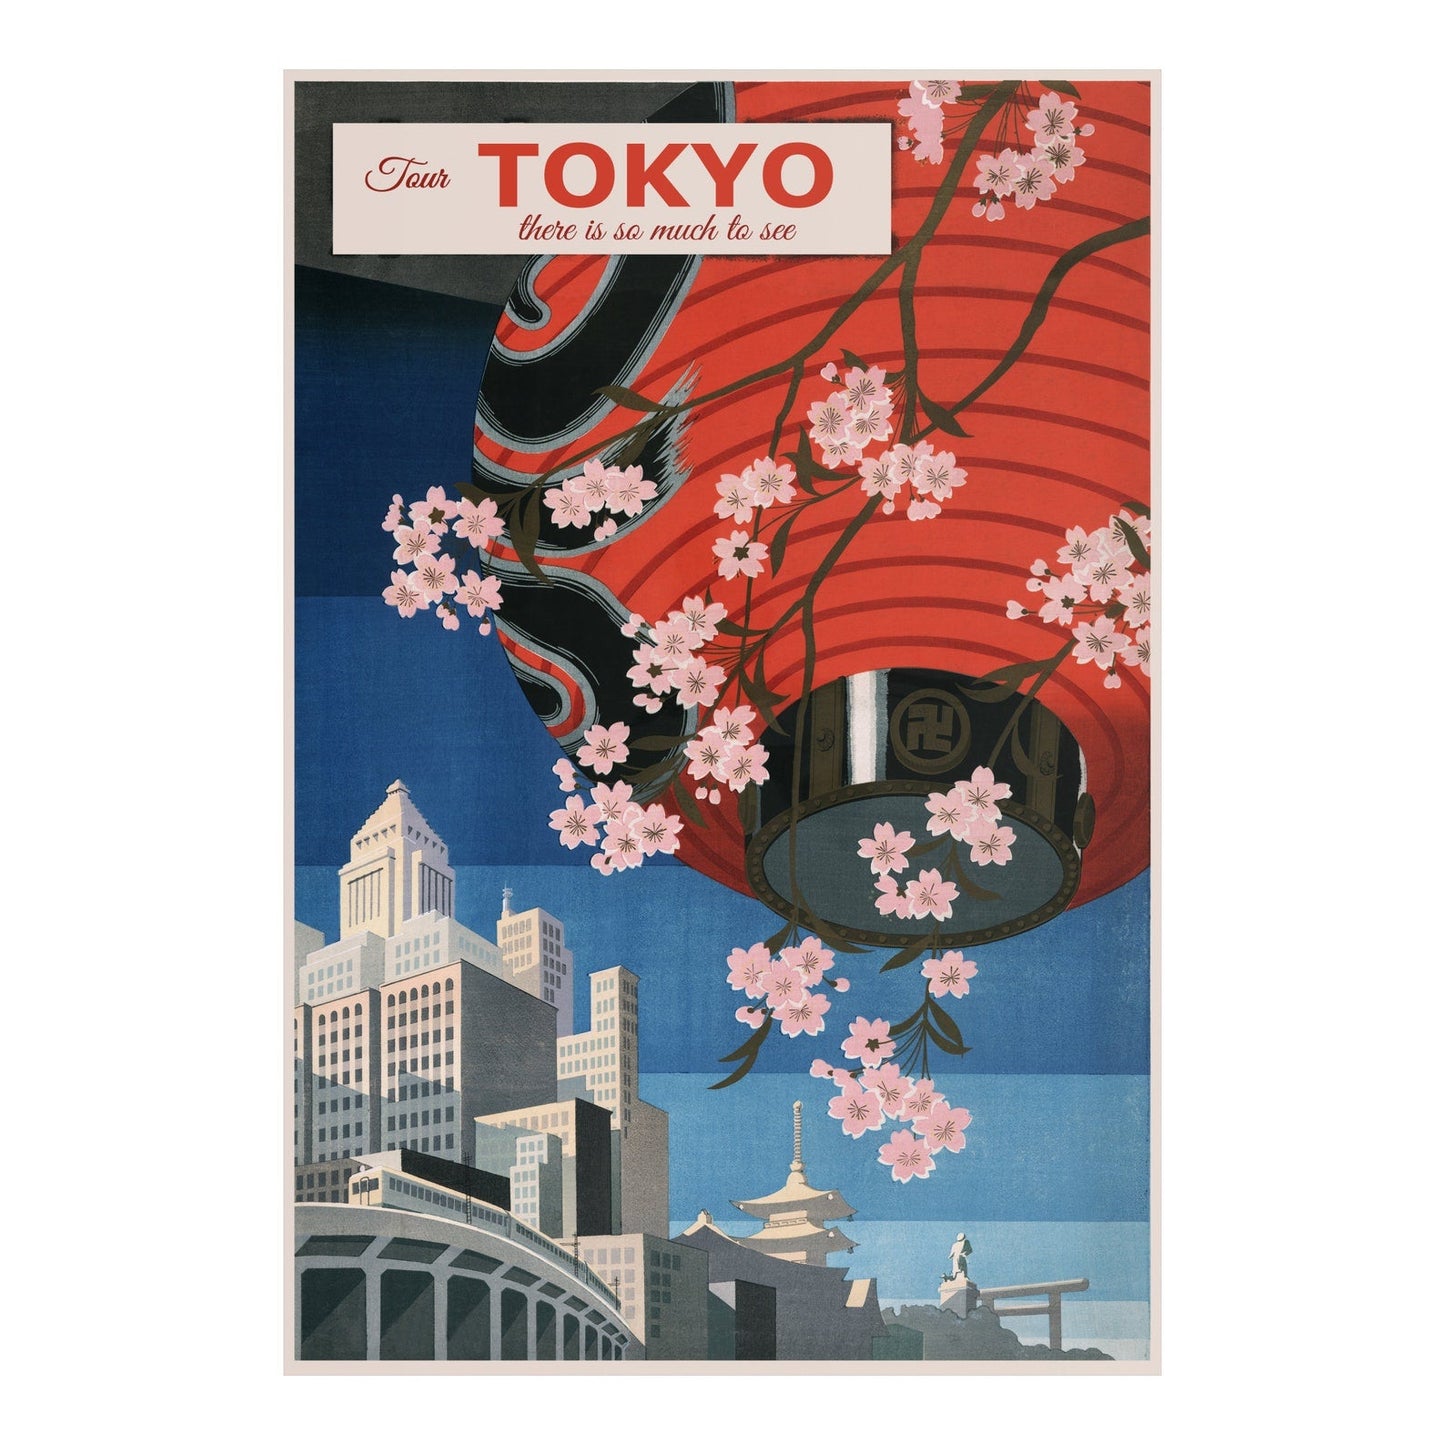 Tour Tokyo - Vintage Japan Travel Poster